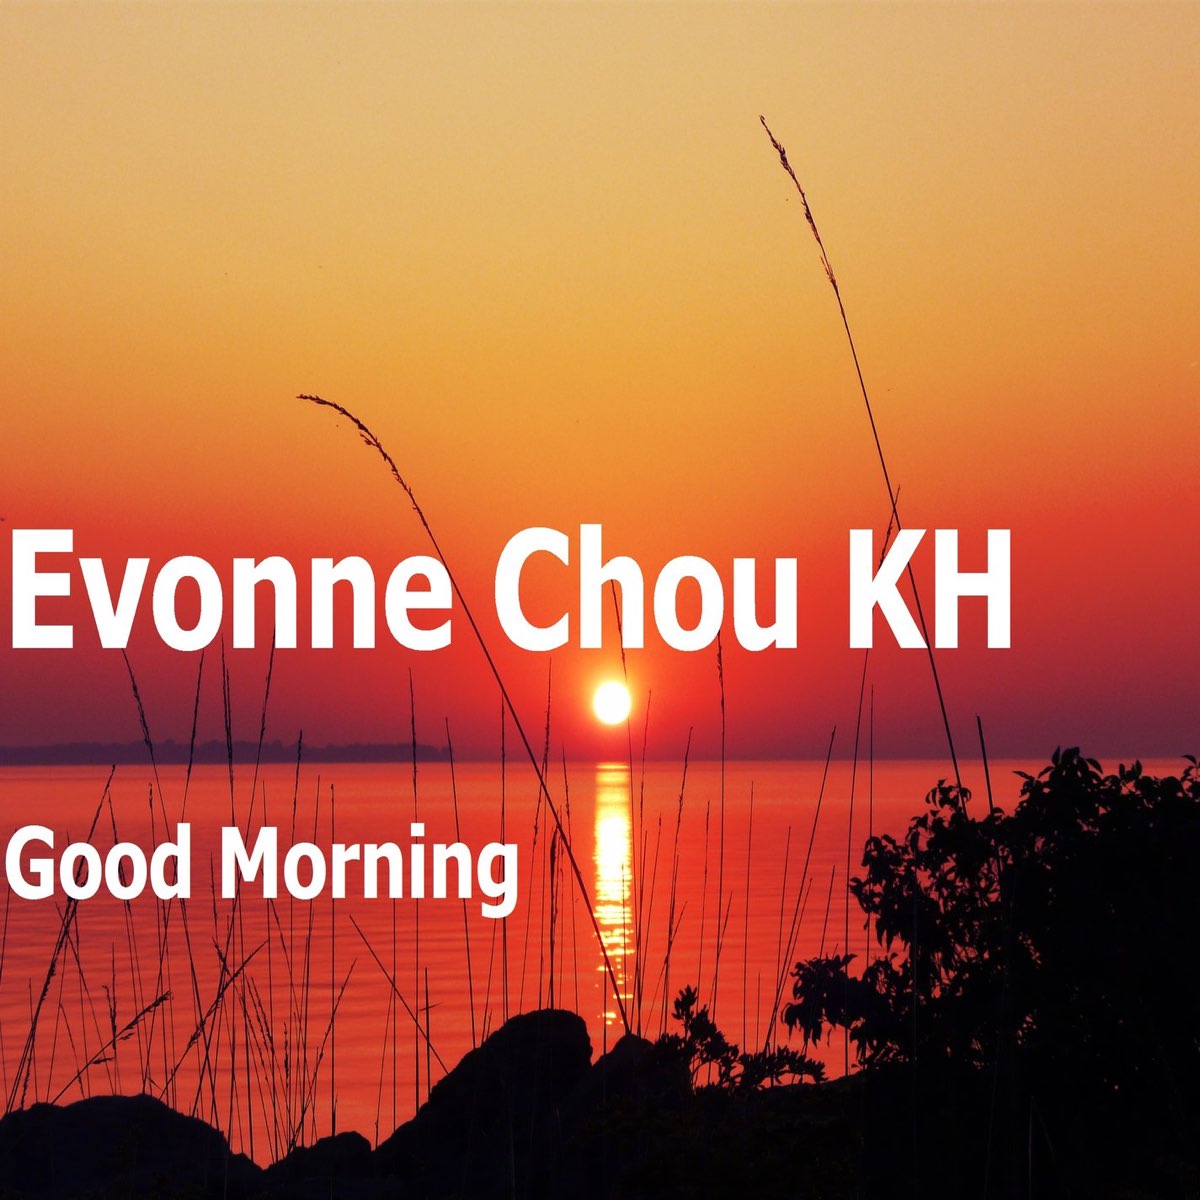 Good Morning - Single by Evonne Chou KH on Apple Music